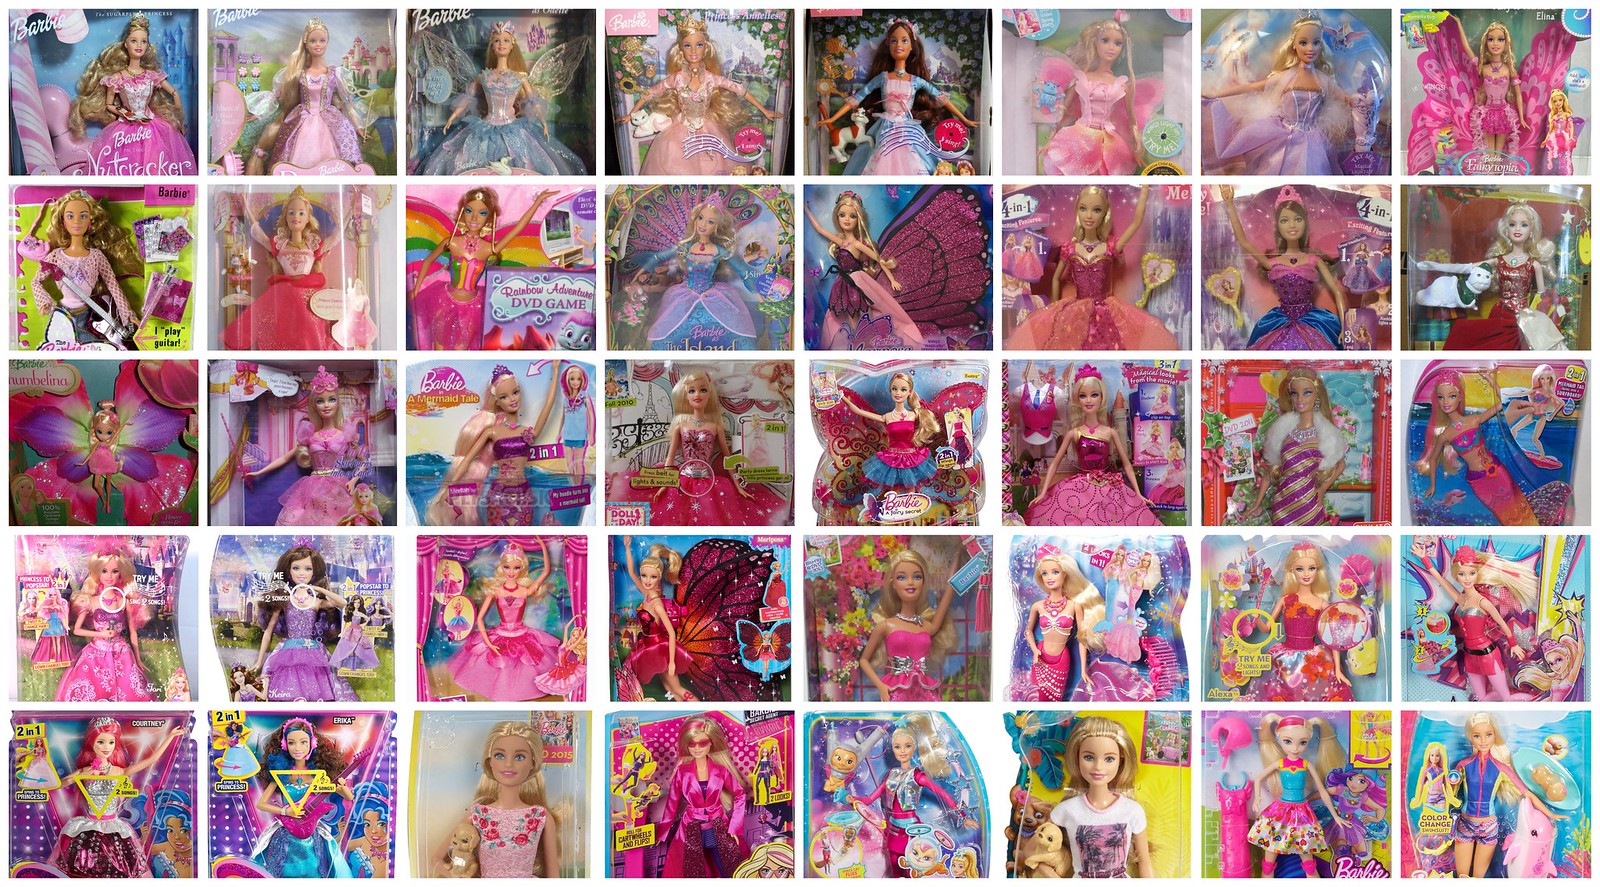 Barbie Movie Dolls Collection June 2019 FINAL Update | Flickr